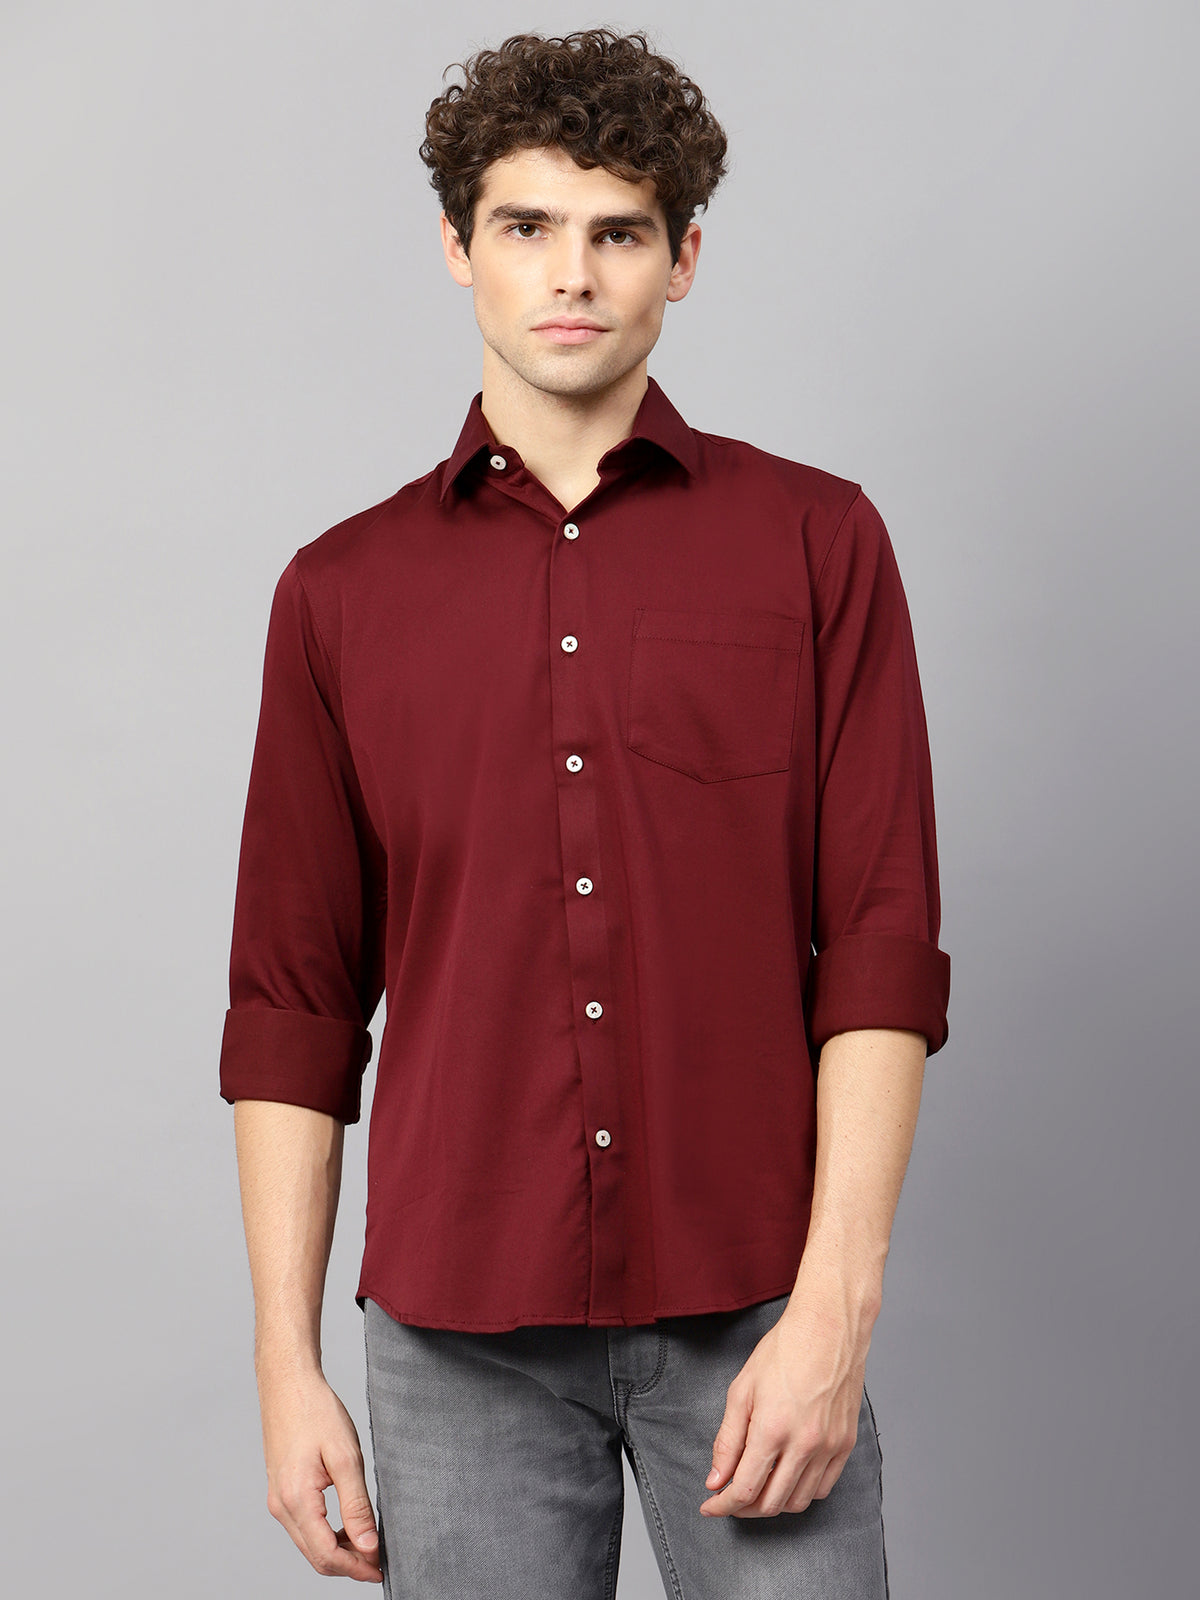 Premium Cotton Lycra Satin Maroon Shirt